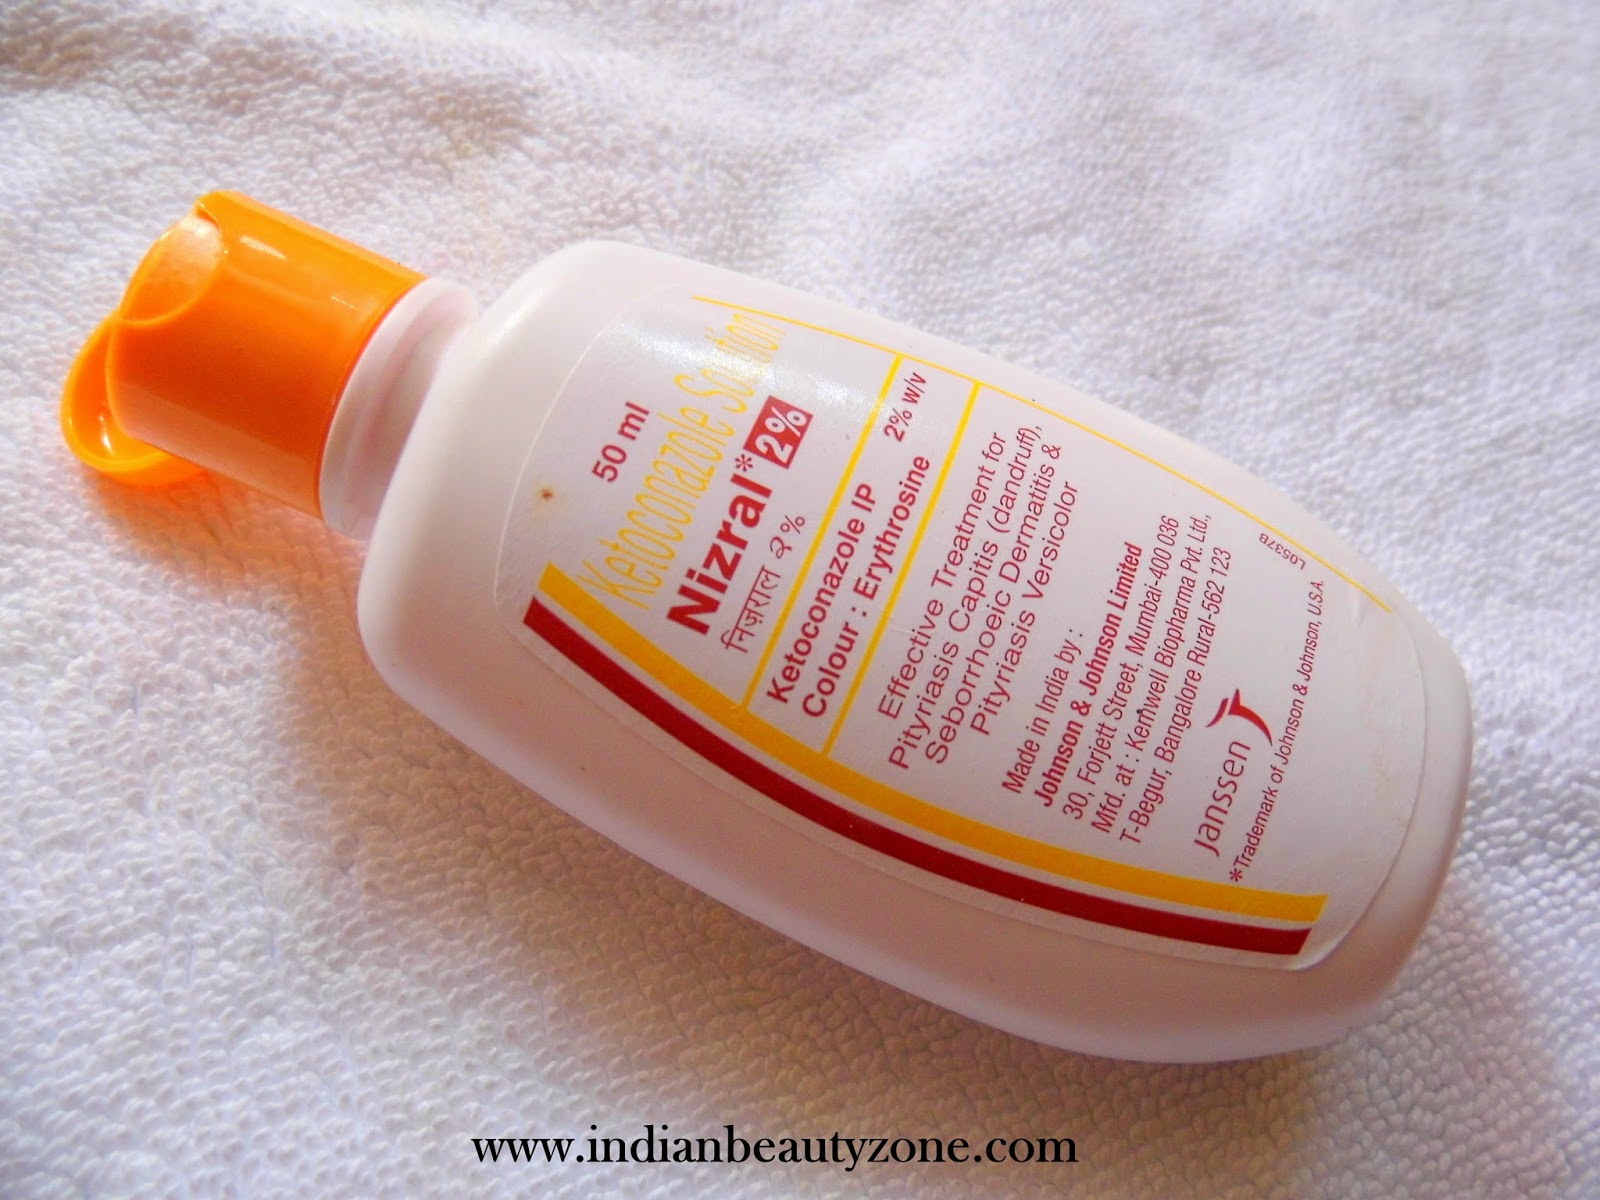 What skin condition does Ketoconazole shampoo treat?